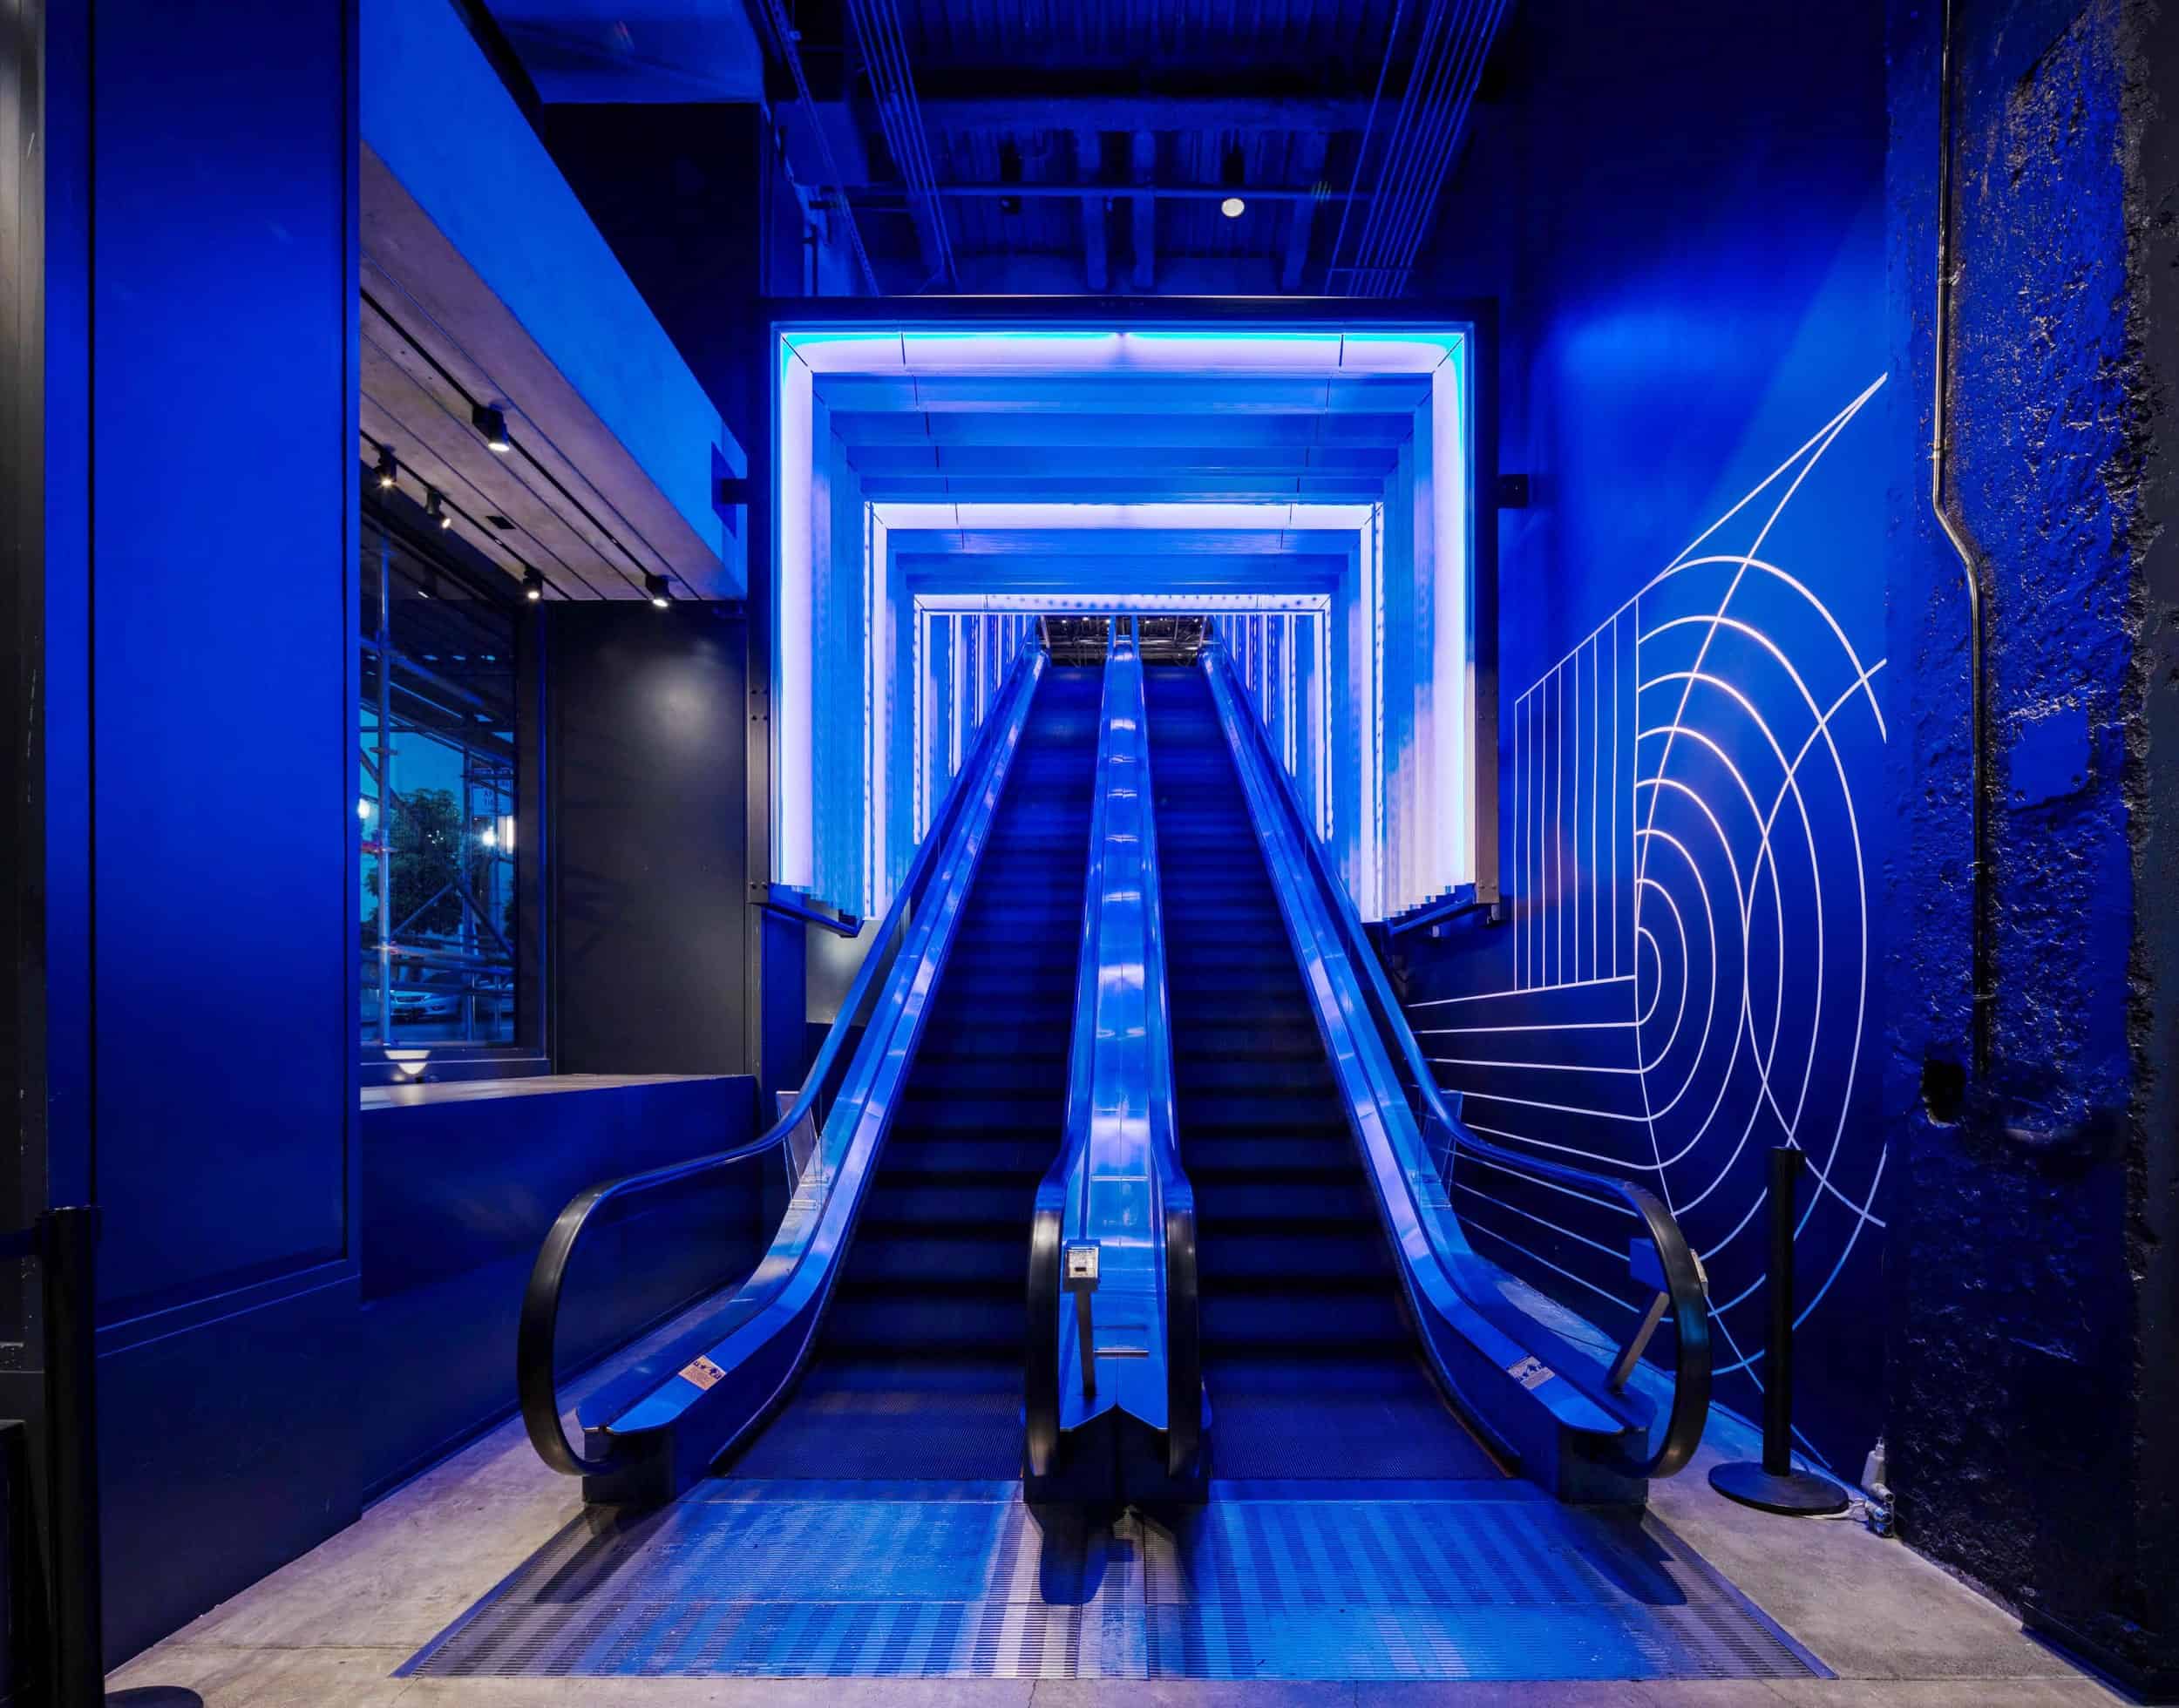 nike-sf-lit-entry-tunnel-escalator-surround